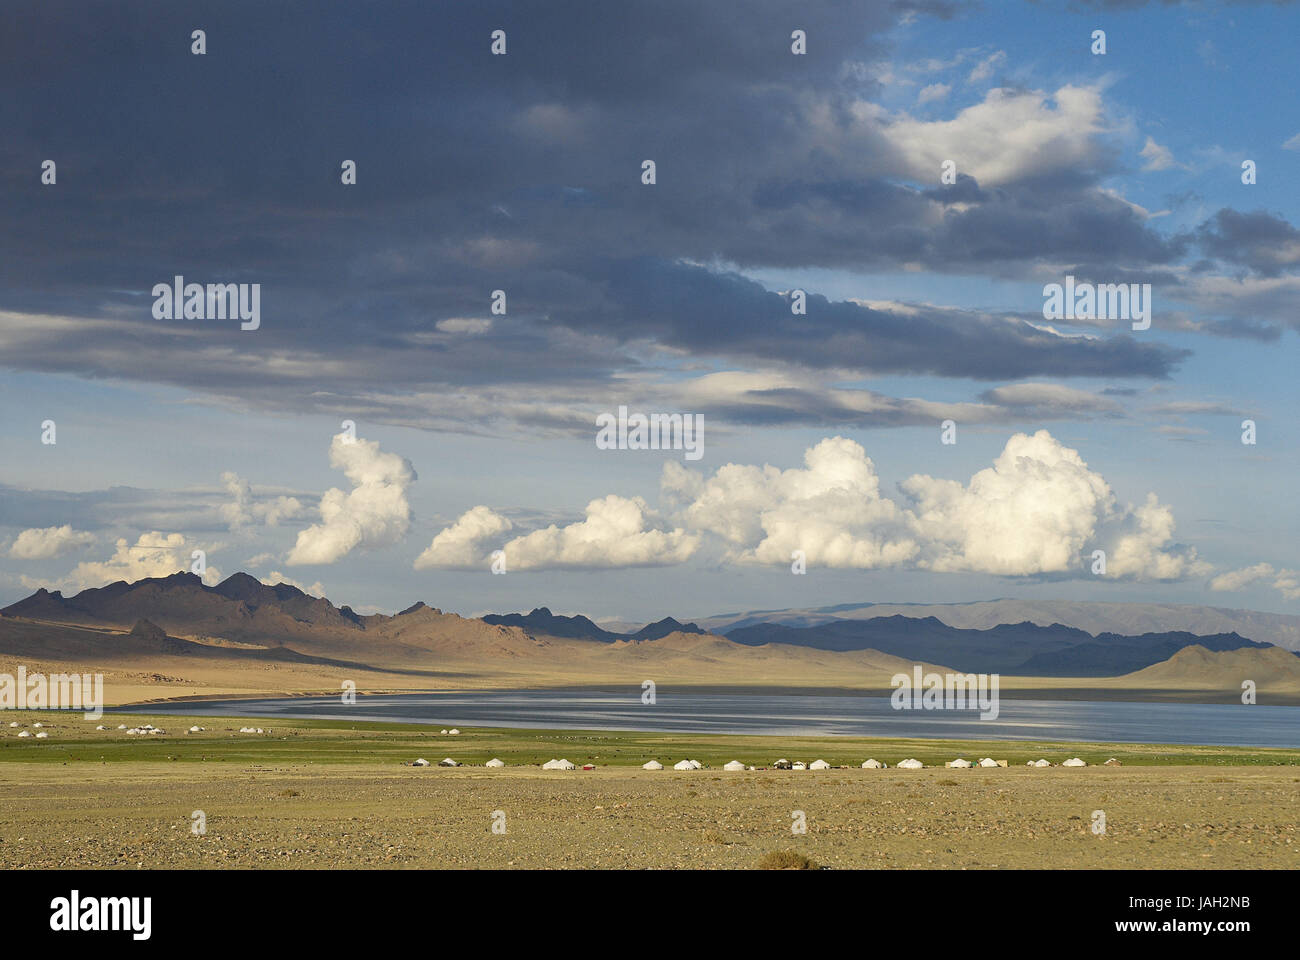 La Mongolie, province de l'ouest extrême,Bayan Olgii province,parc national Tsambagarav,Kasachen,nomad,support,Jurten, Banque D'Images